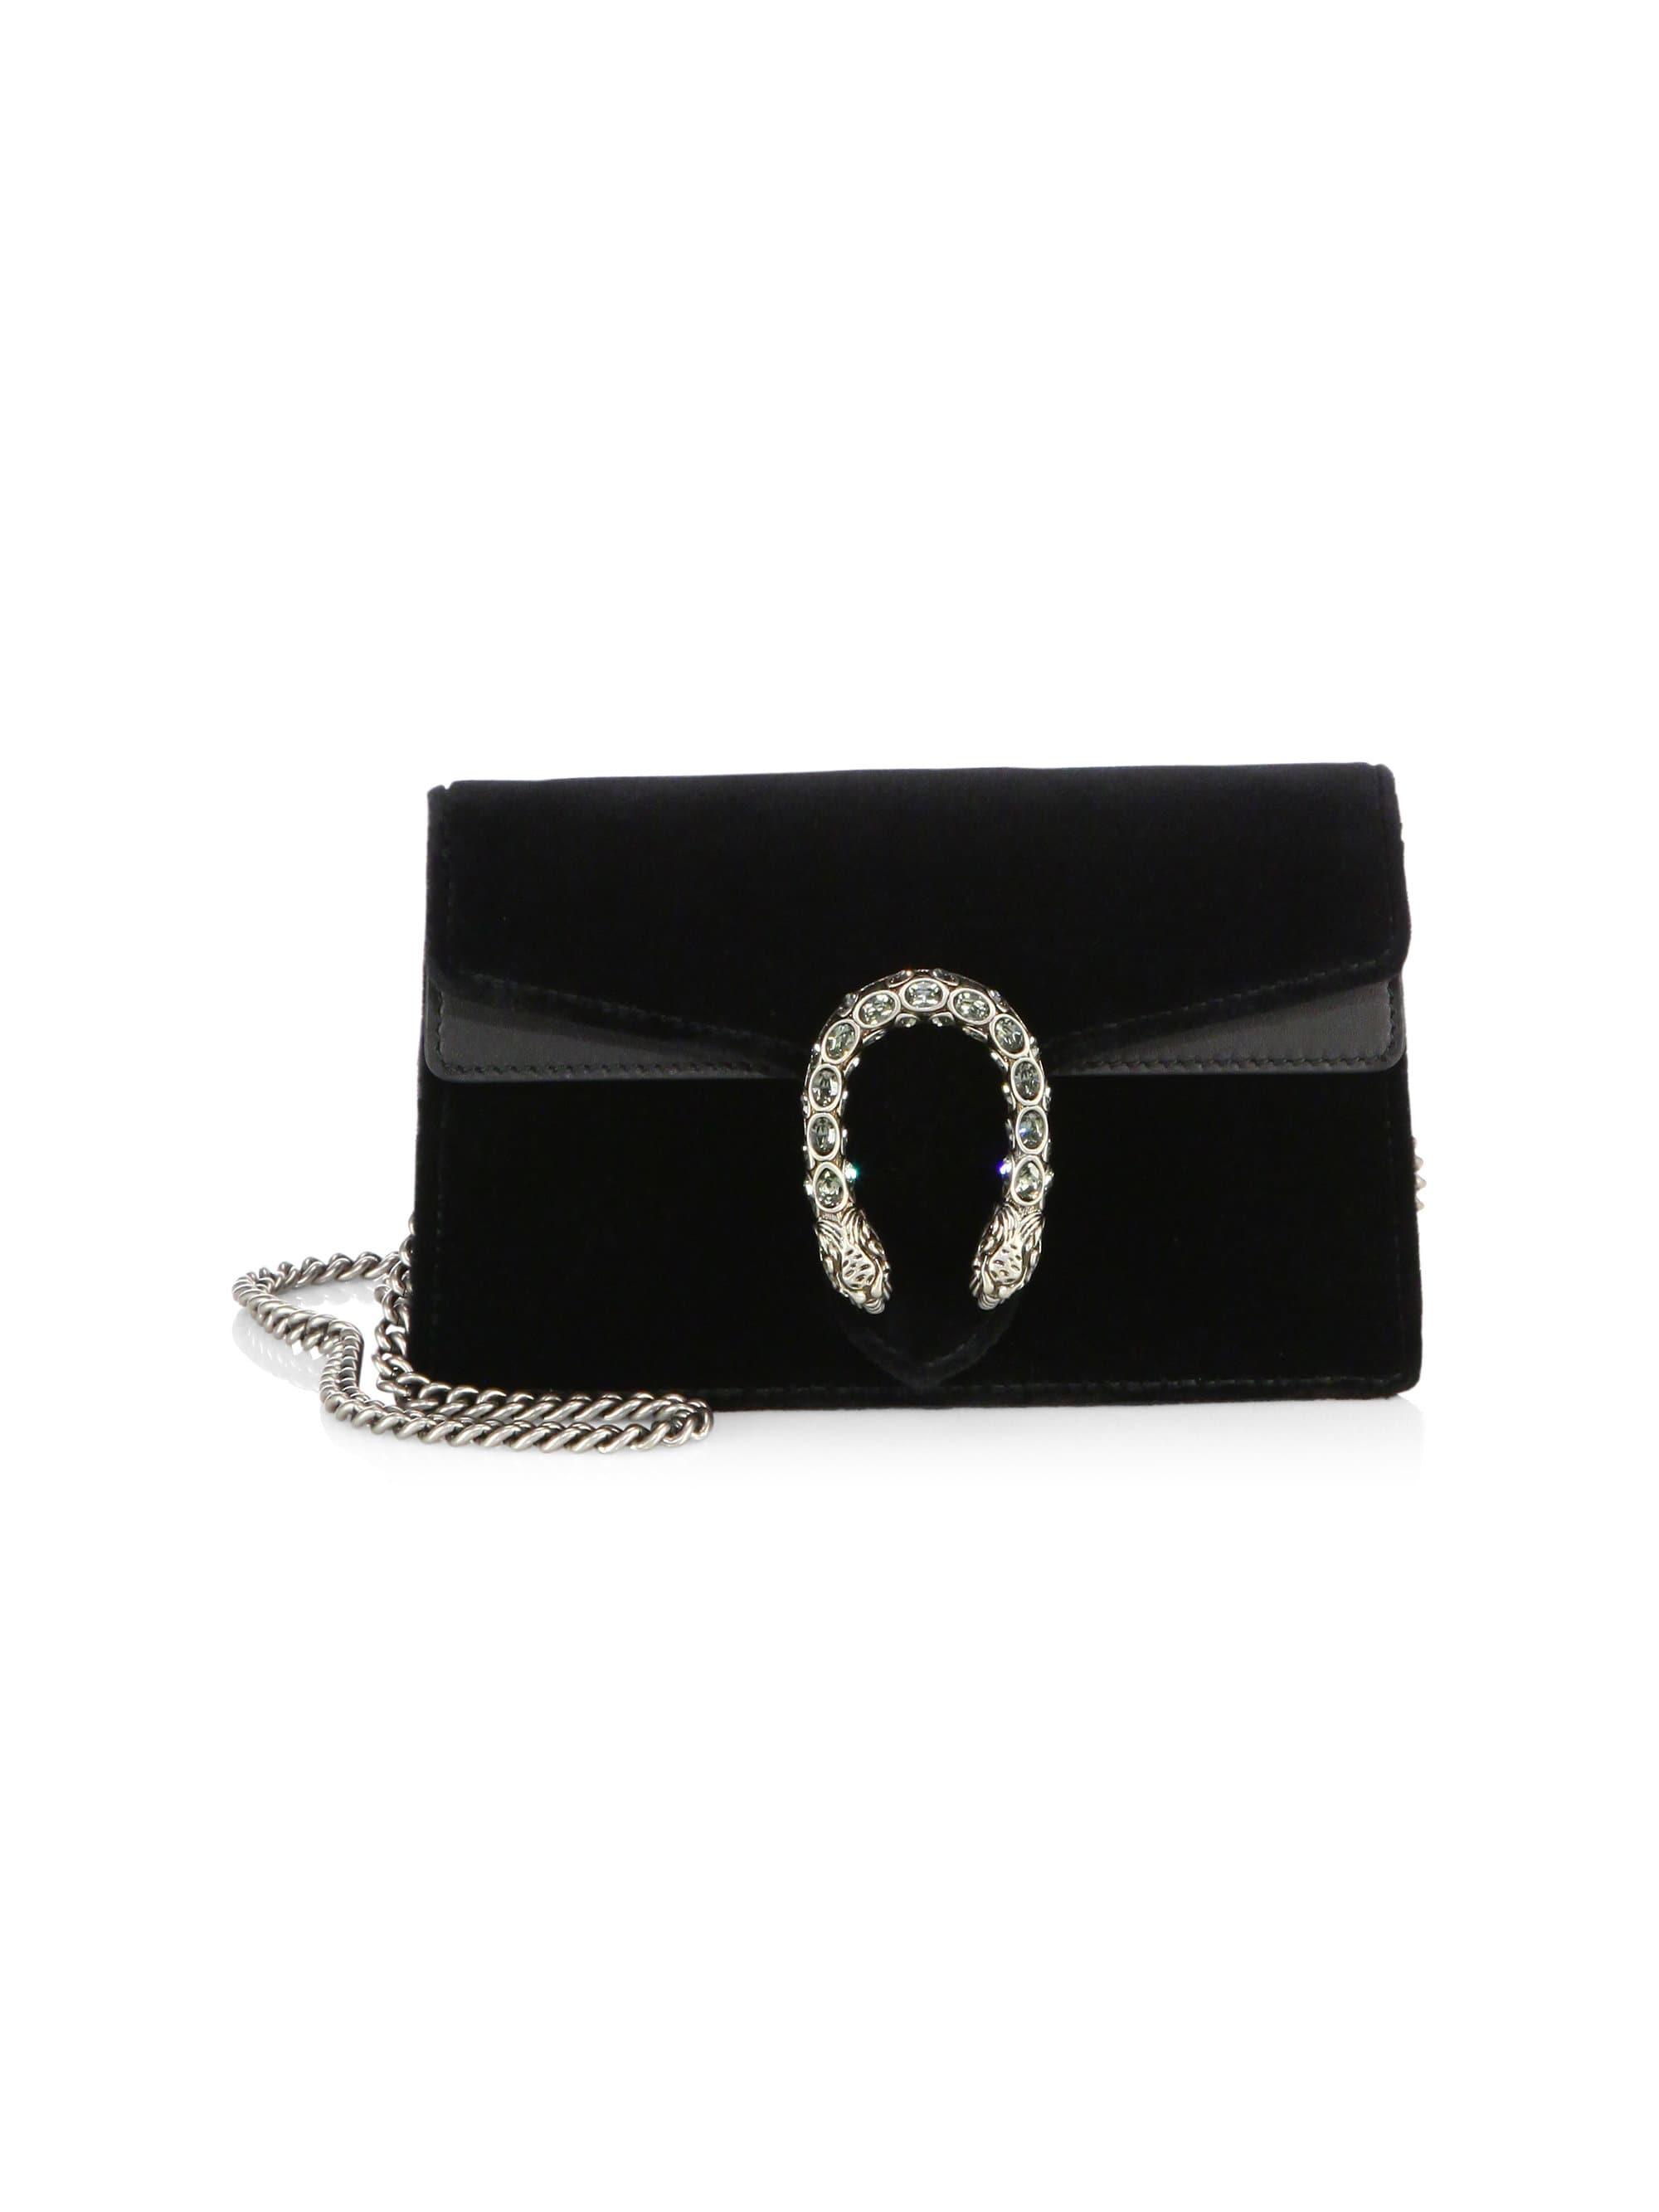 Gucci Dionysus Velvet Mini Chain Shoulder Bag in Black - Lyst